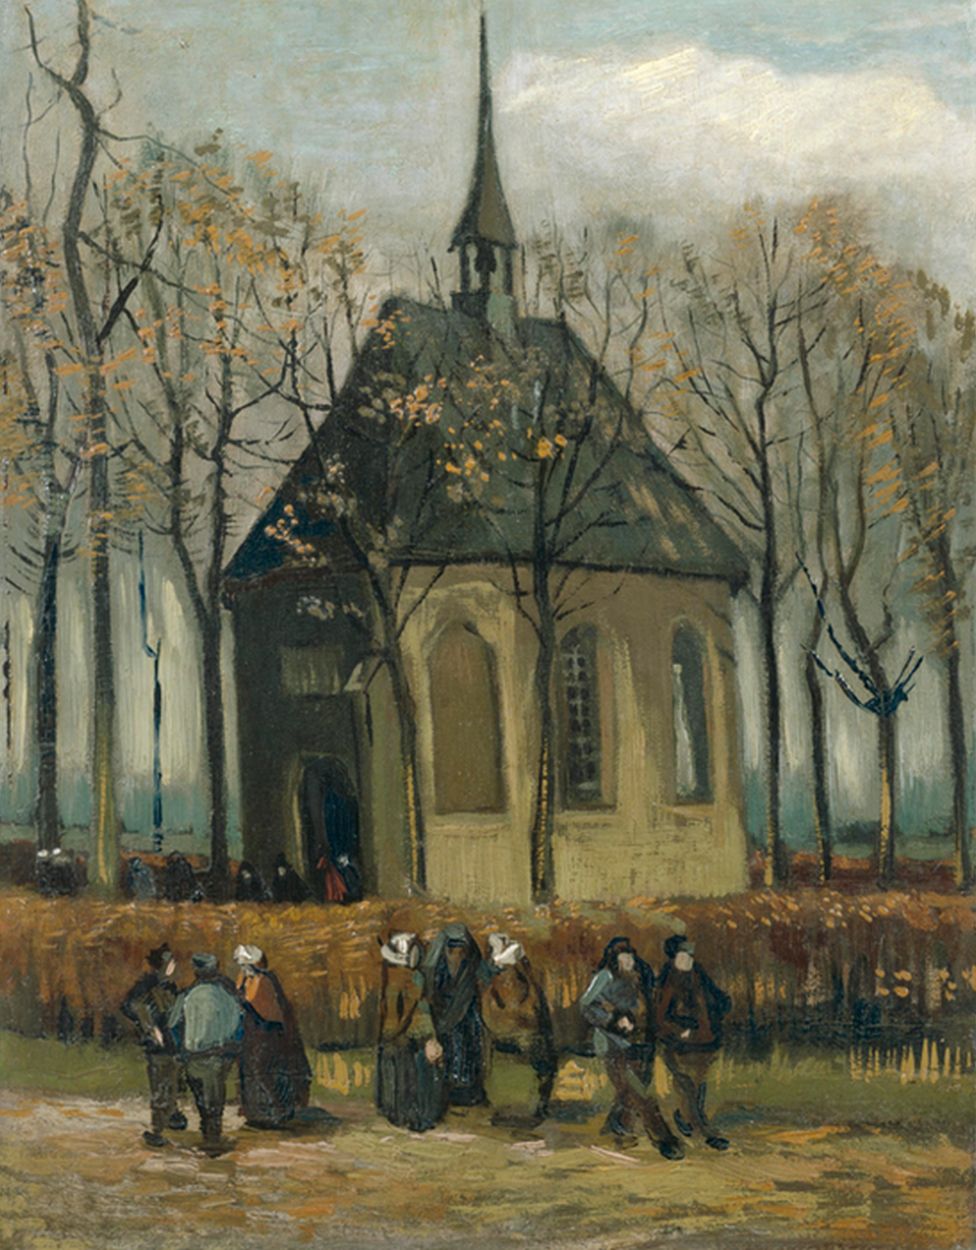 Vincent van Gogh, Congregation Leaving the Reformed Church in Nuenen, 1884 - 1885